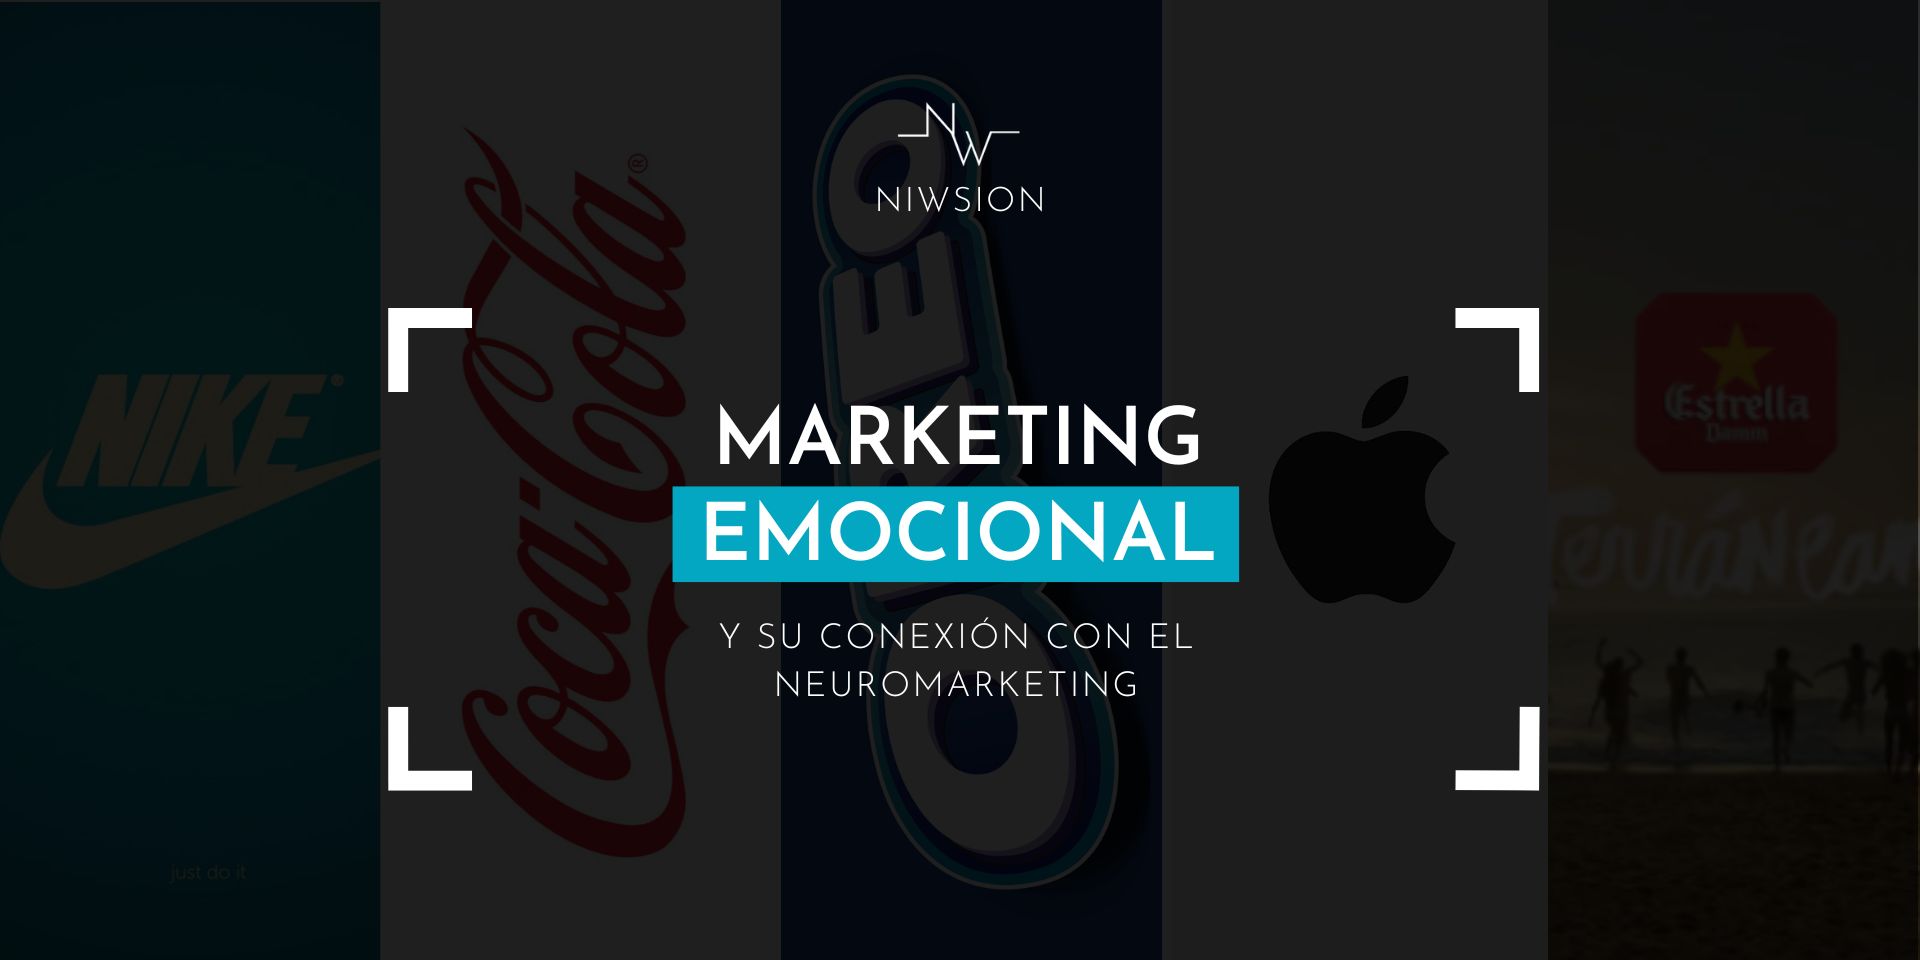 Marketing emocional y neuromarketing Niwsion